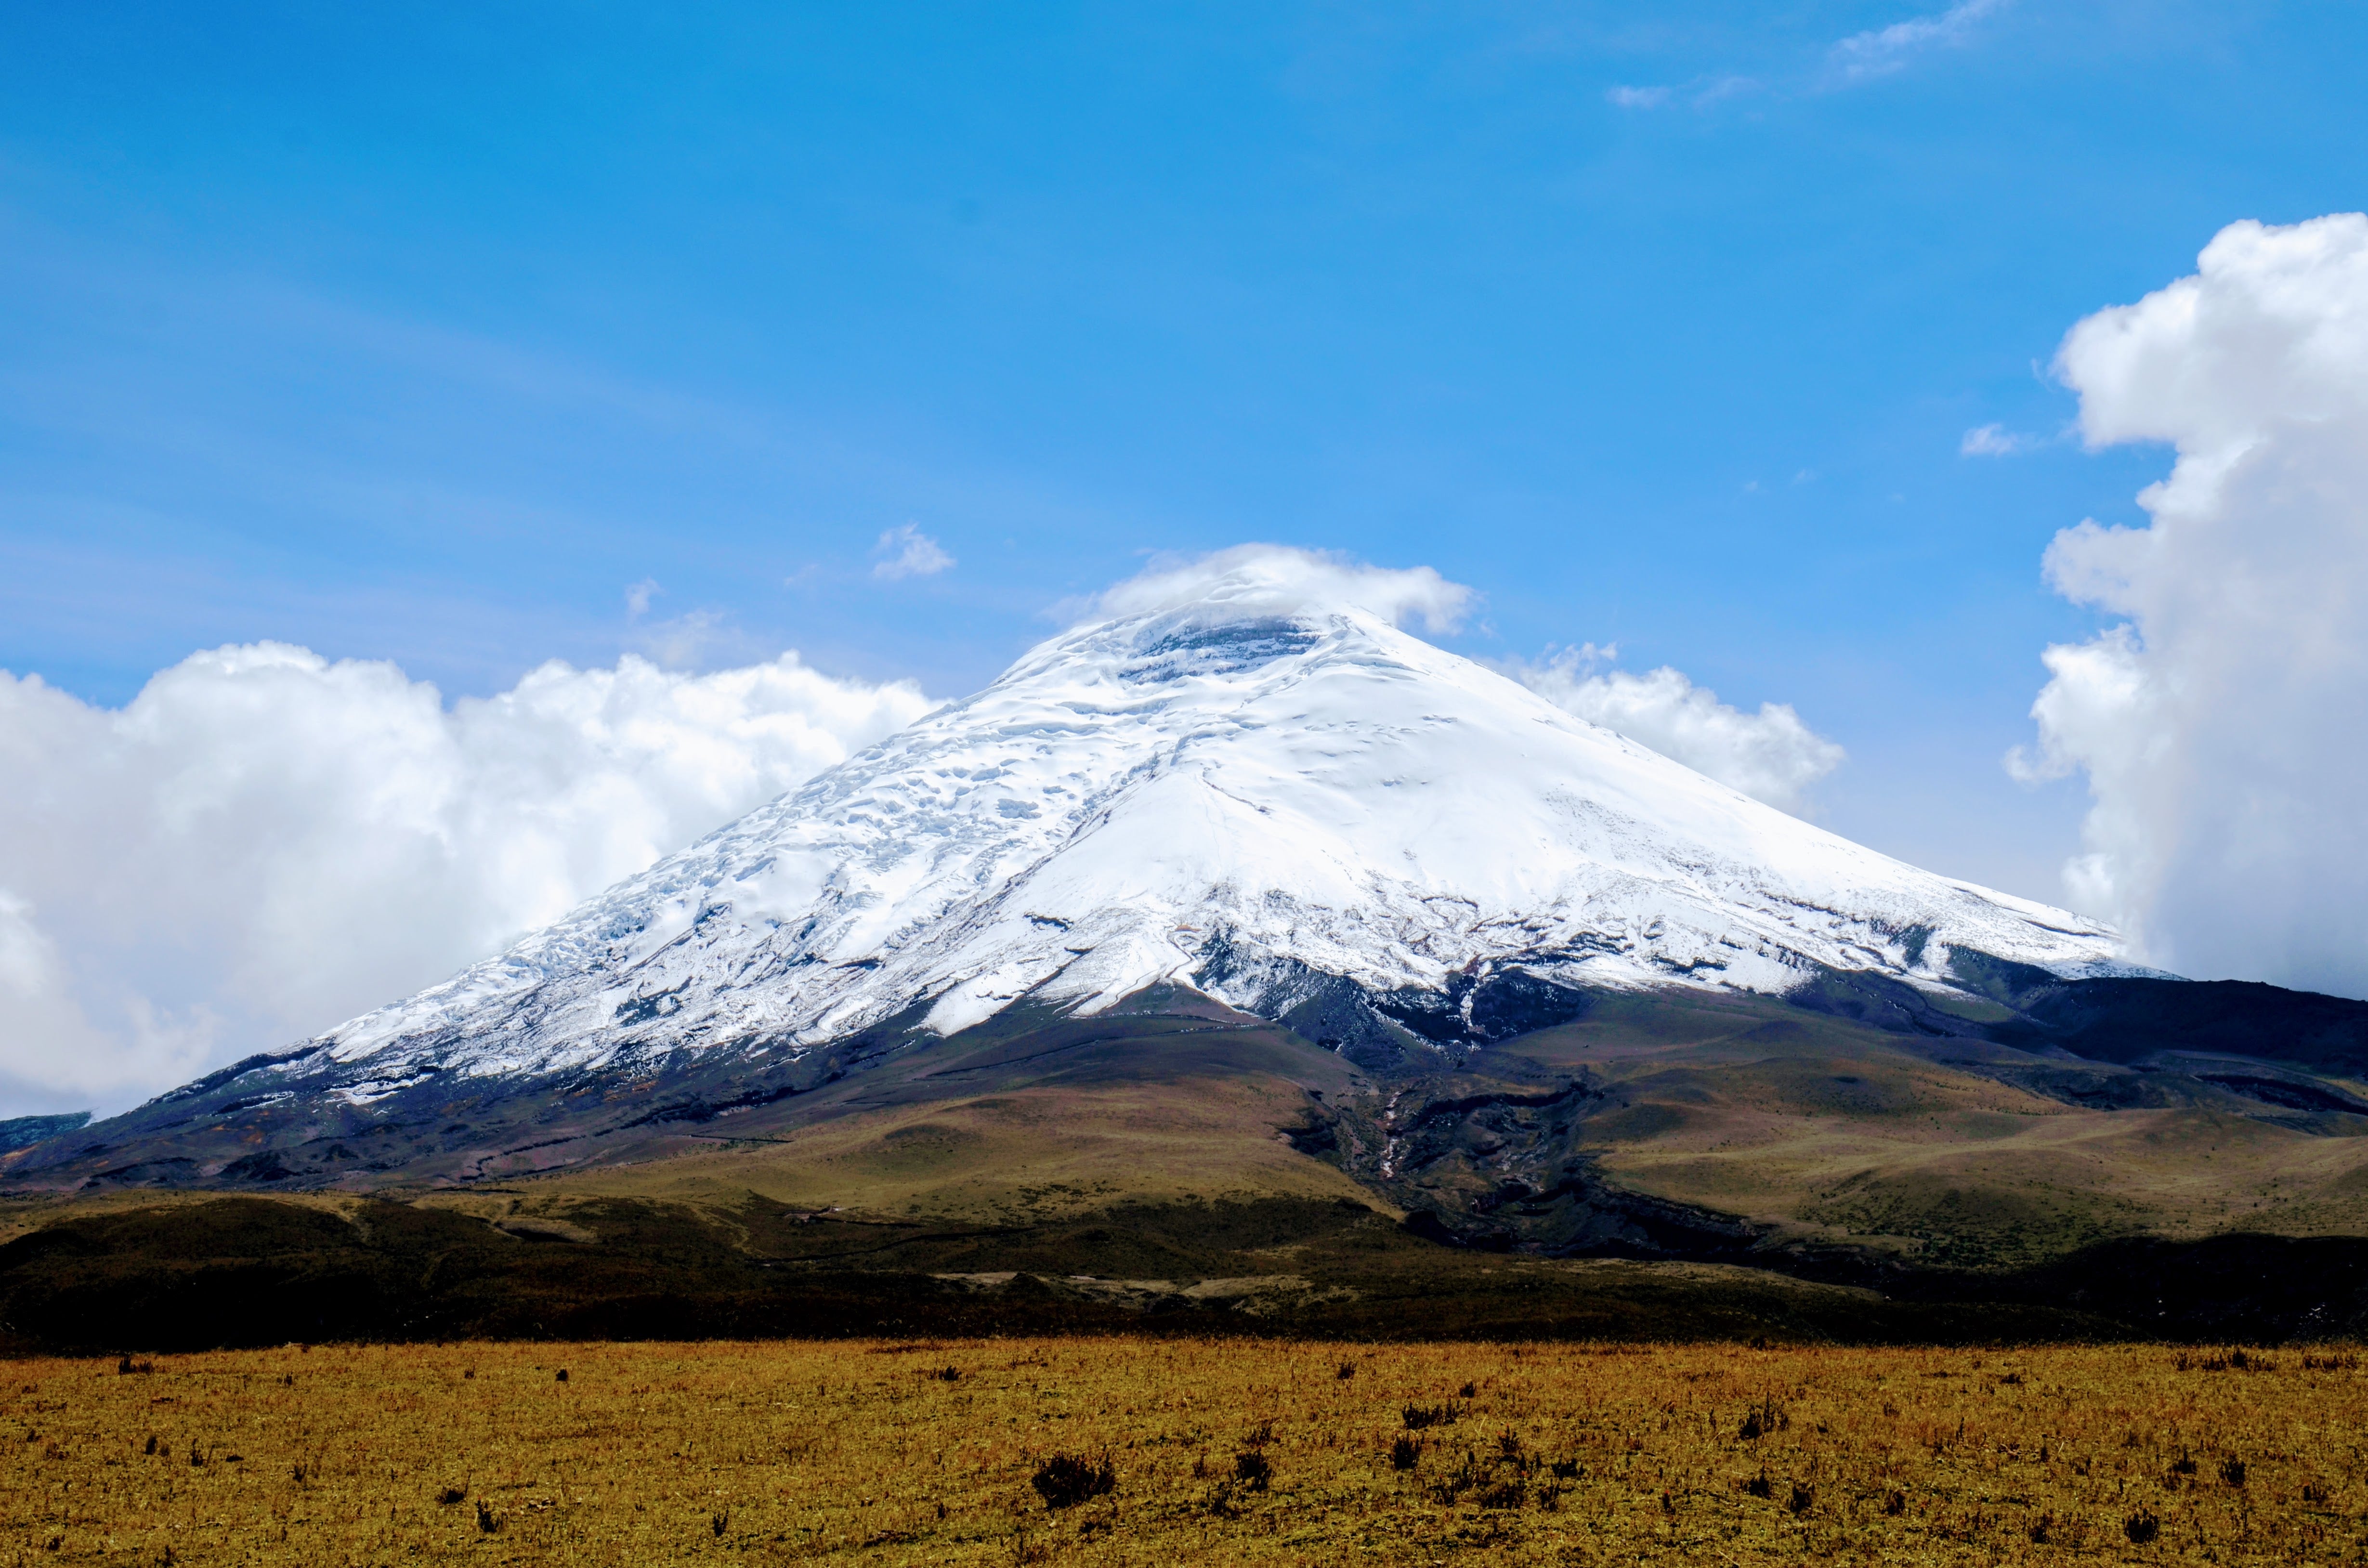 Ecuador has an abundance of natural sites